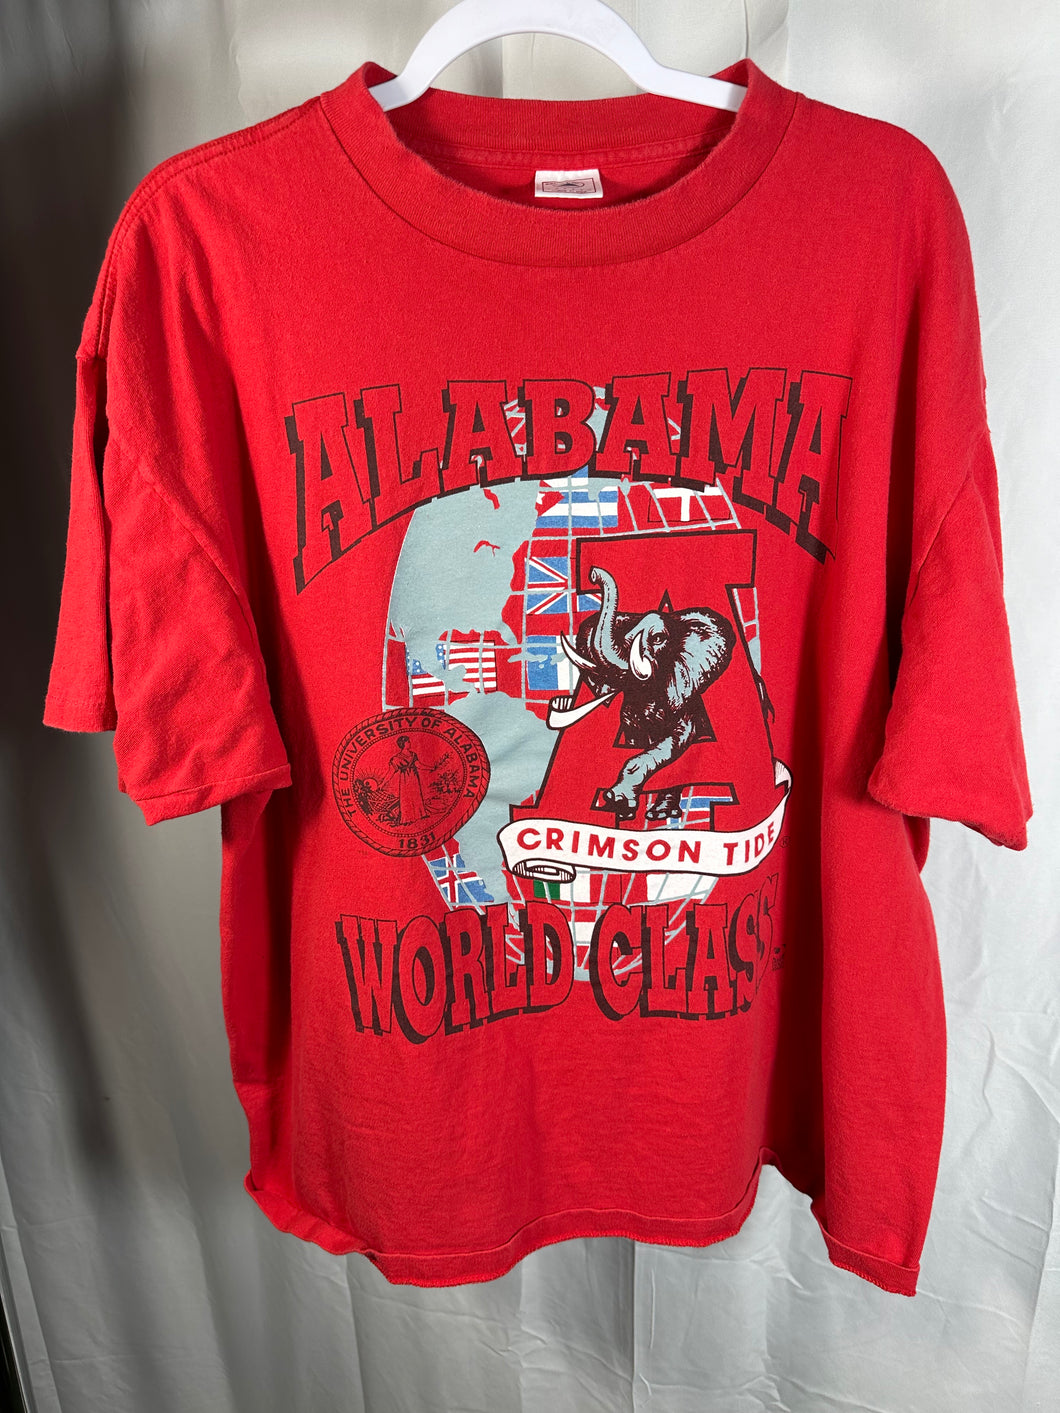 Vintage Alabama “World Class” Graphic T-Shirt XL